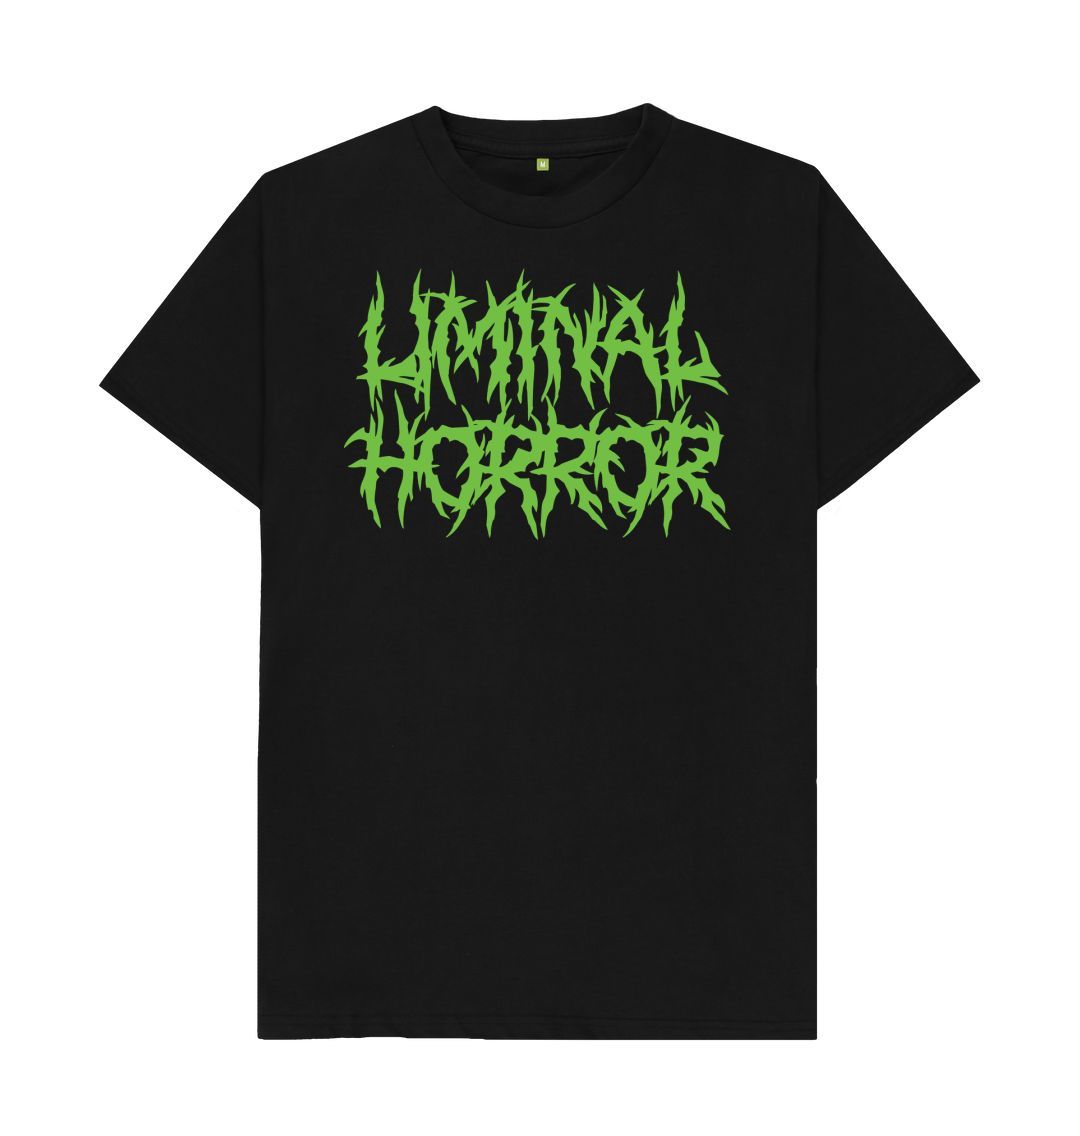 Black Liminal Horror Green Logo on Black Shirt